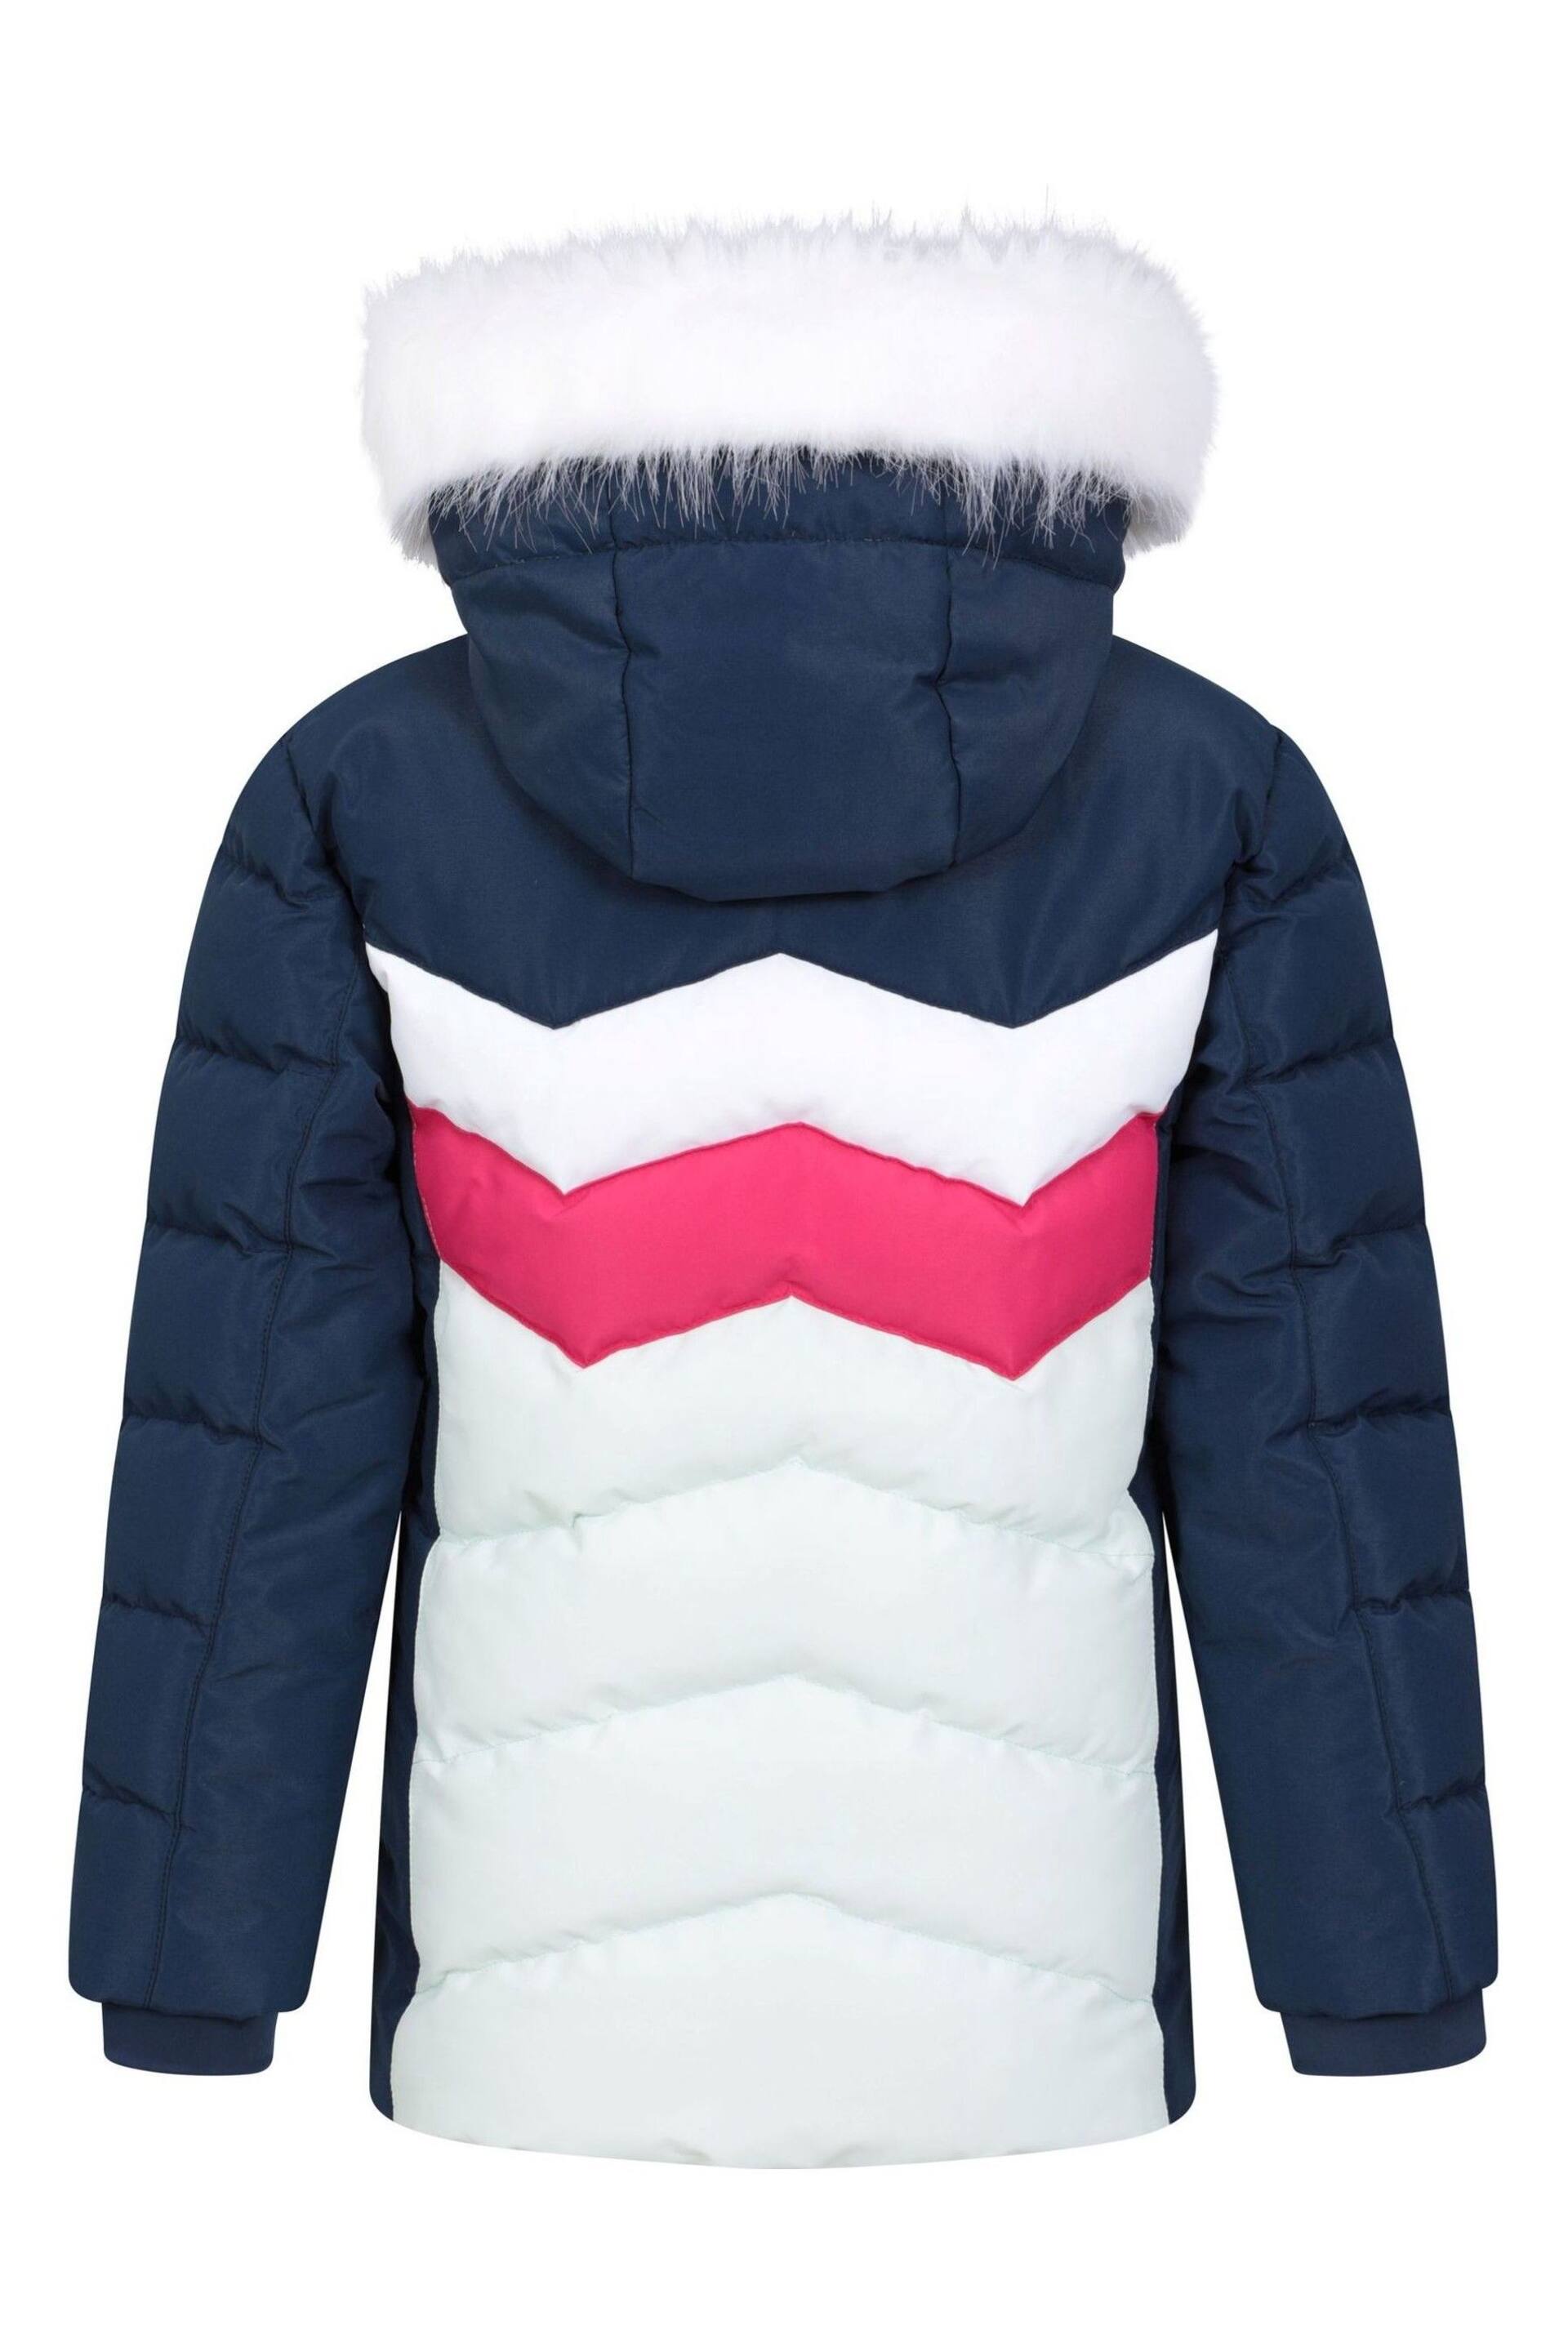 Mountain Warehouse Grey Kids Arctic Water Resistant Ski Jacket - Image 2 of 5